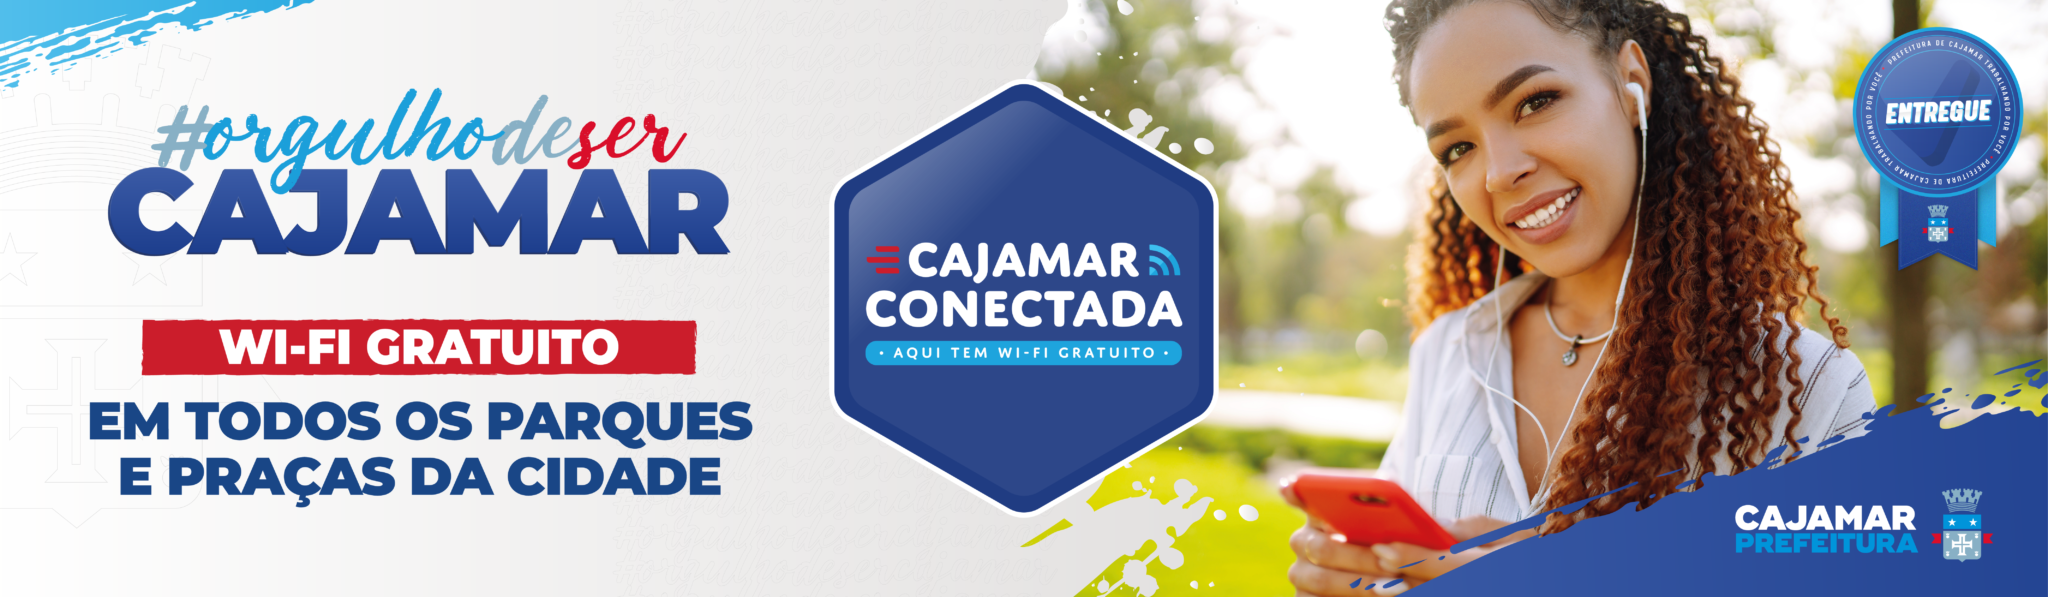 Cajamar Conectada